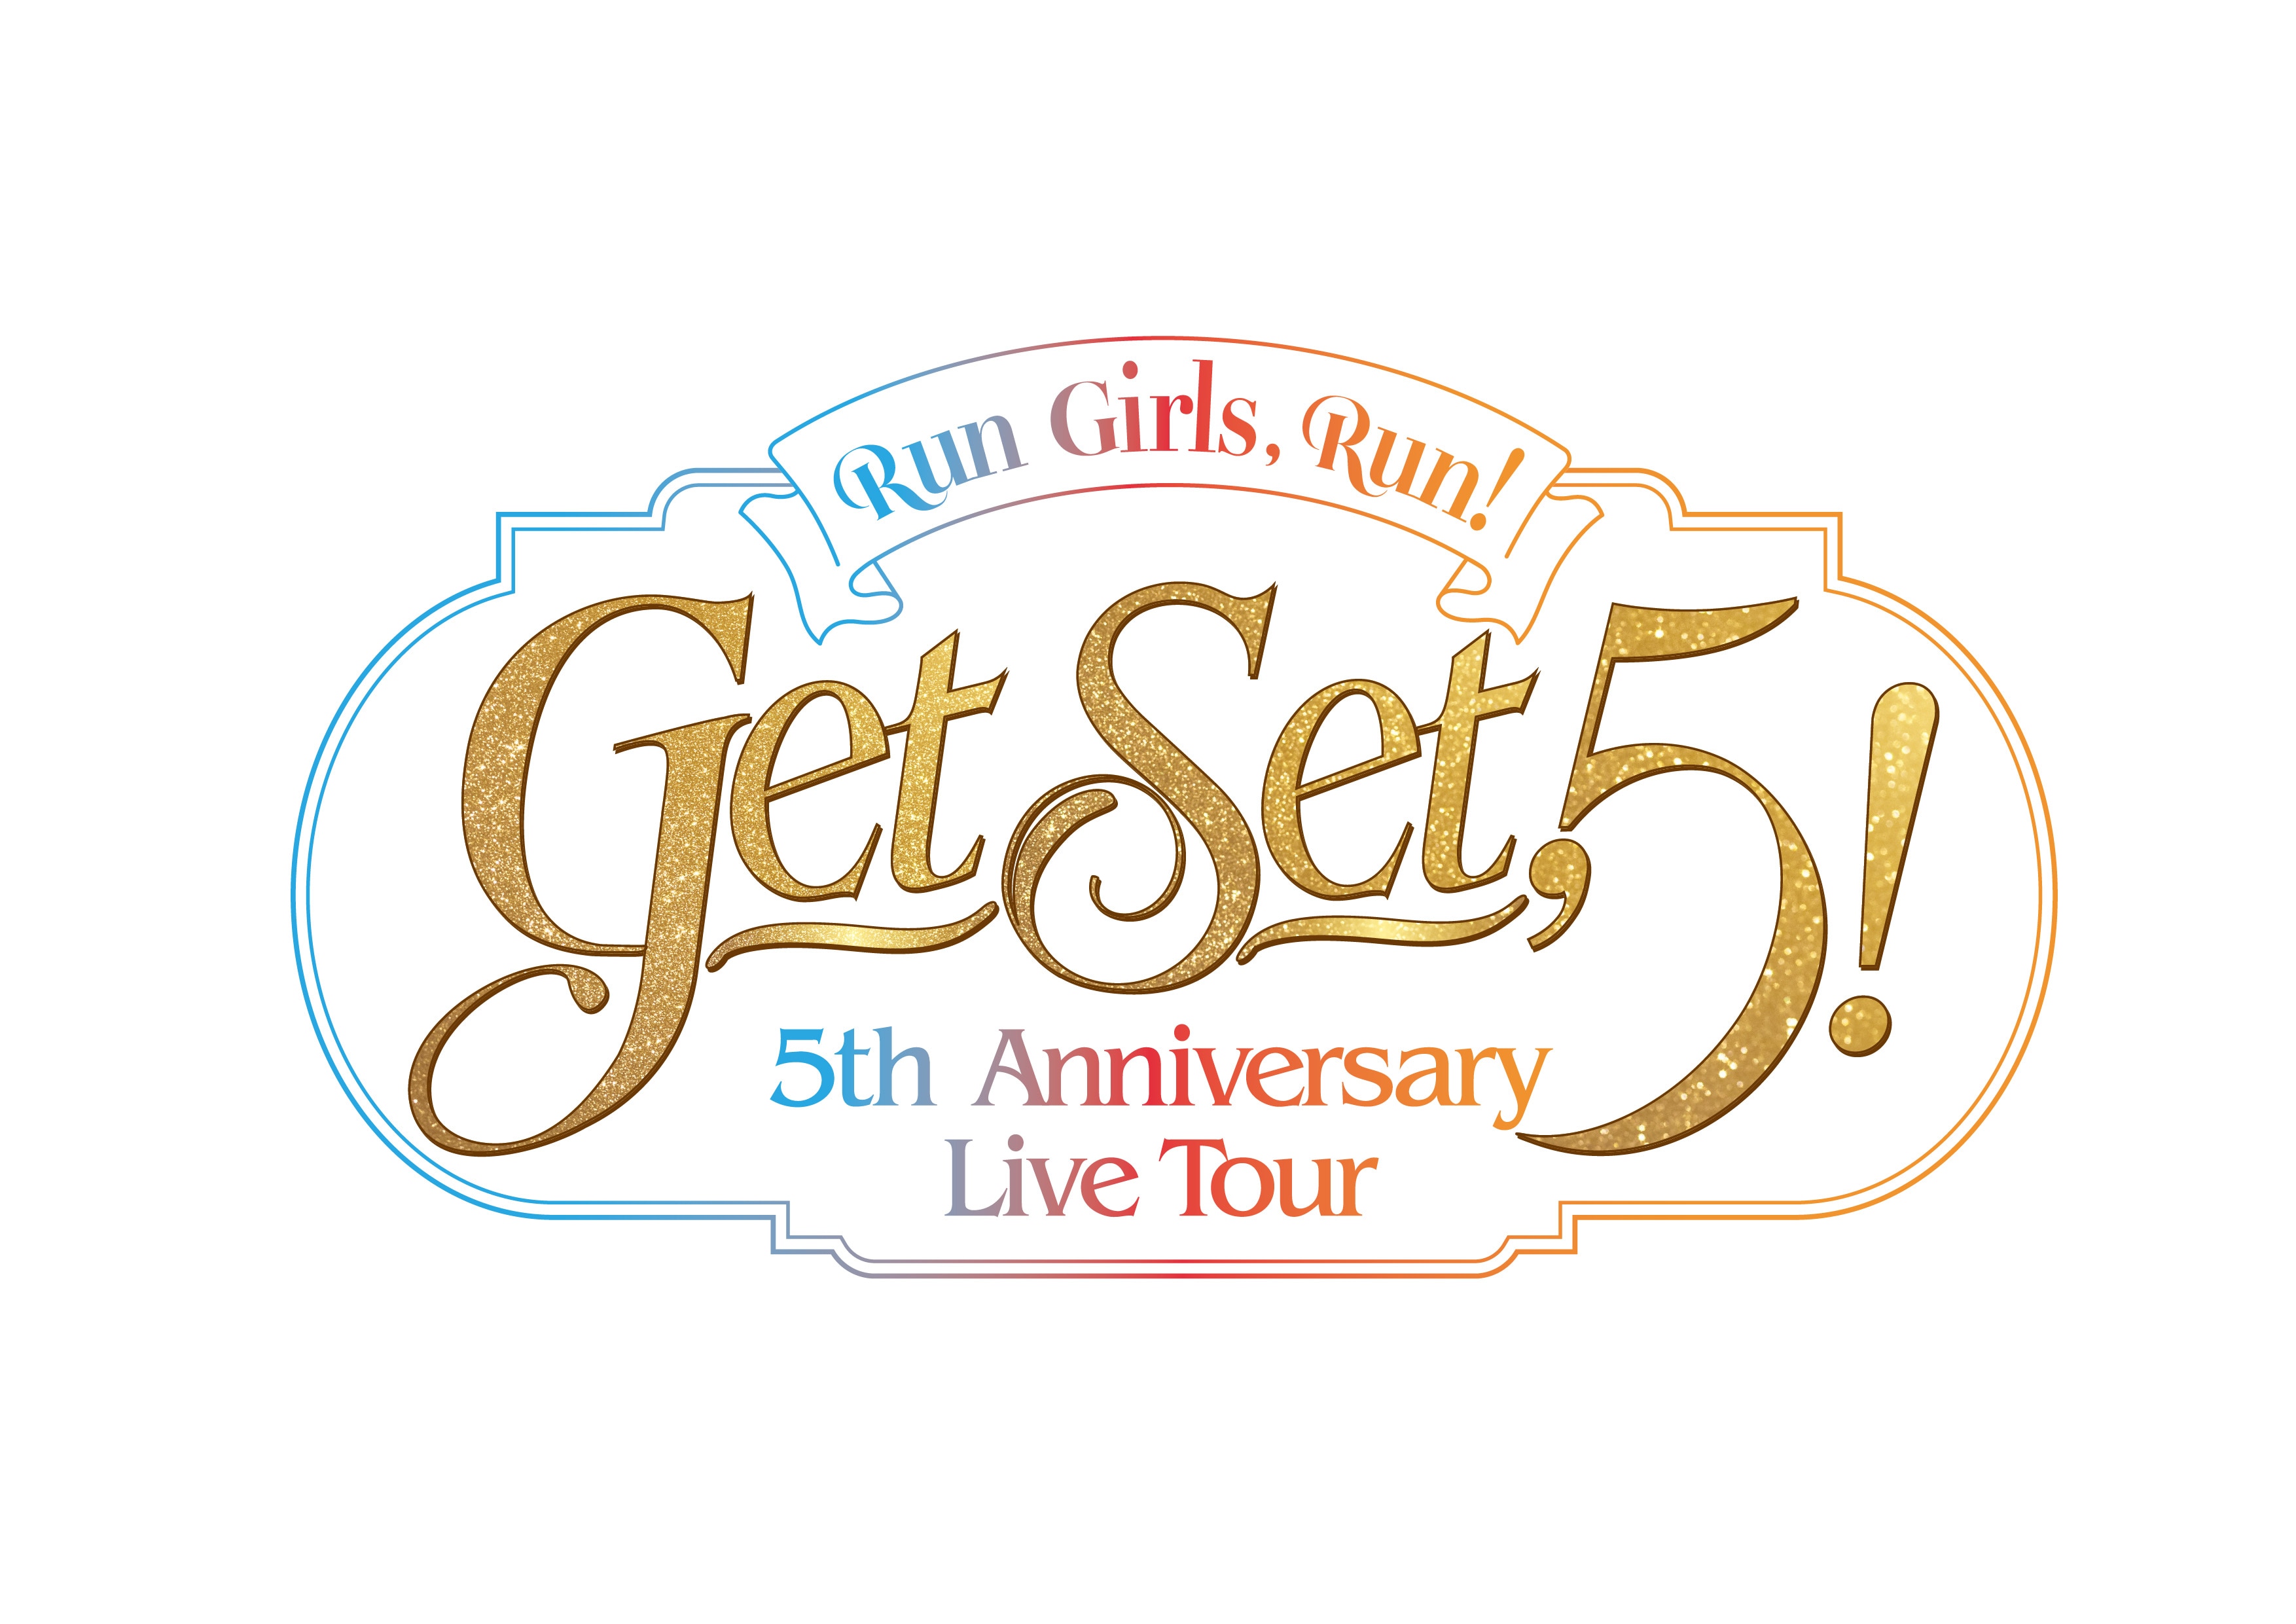 Run Girls, Run！5th Anniversary Live Tour Get Set, 5！